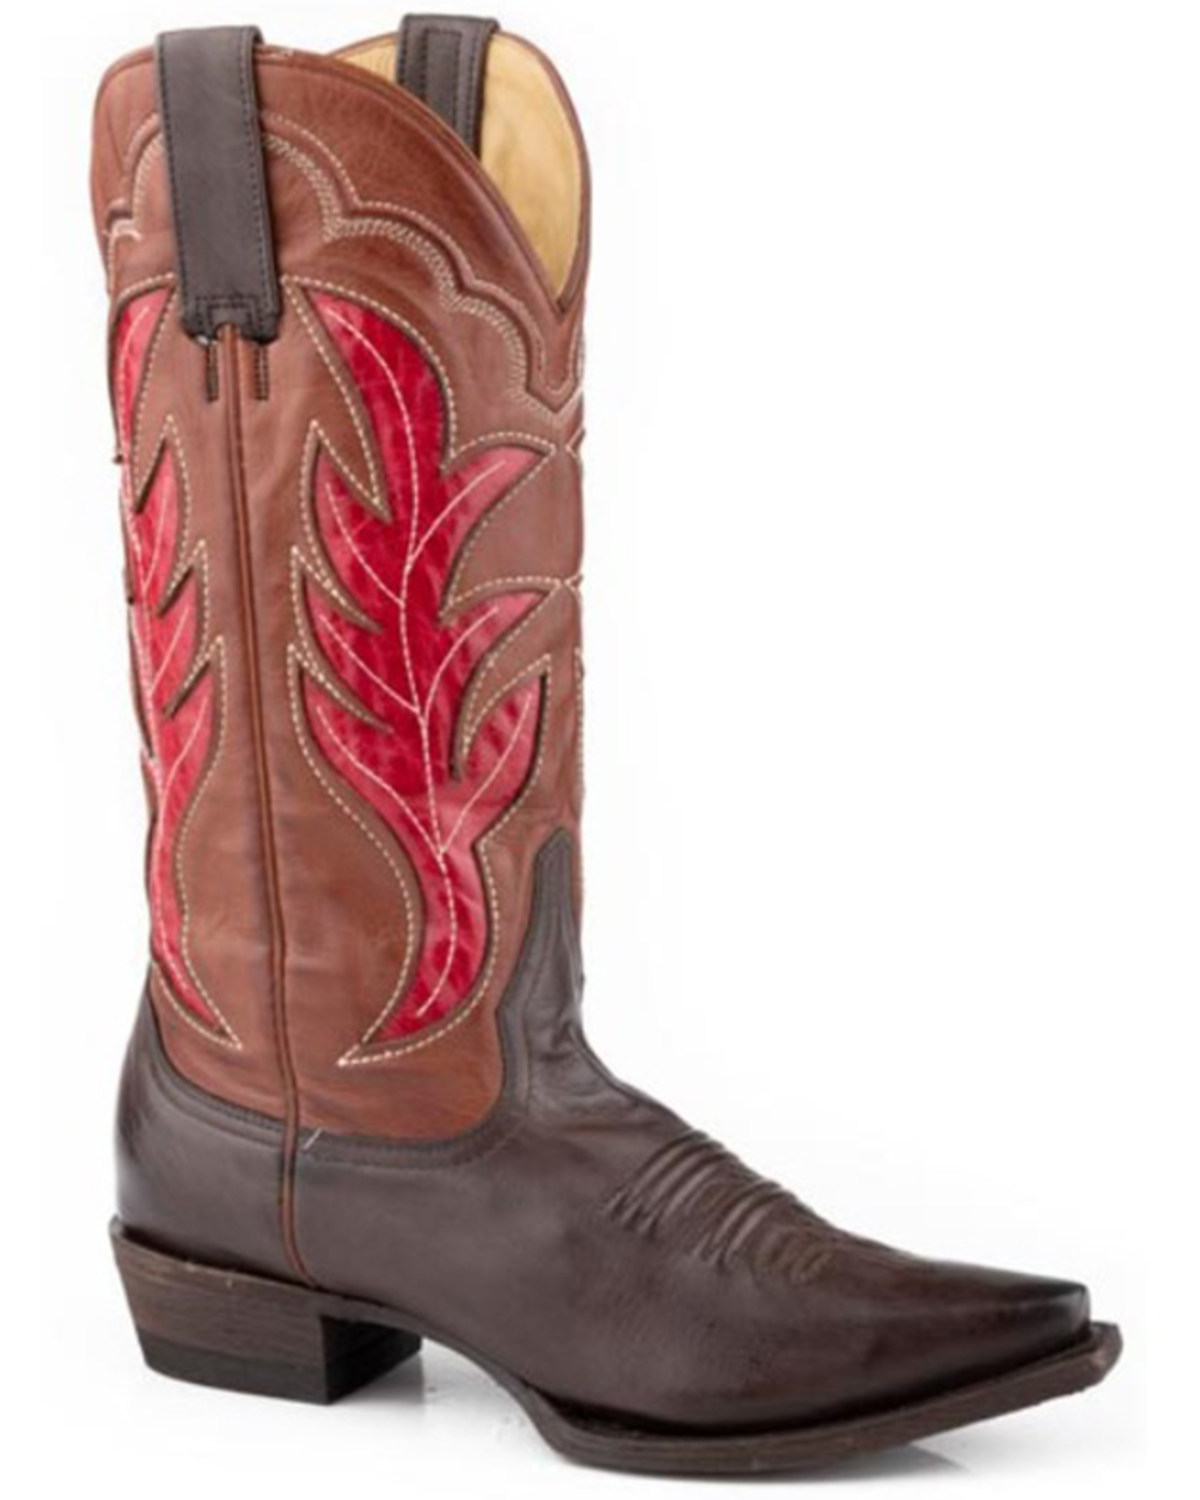 Roper Women's Erin Western Boots - Snip Toe